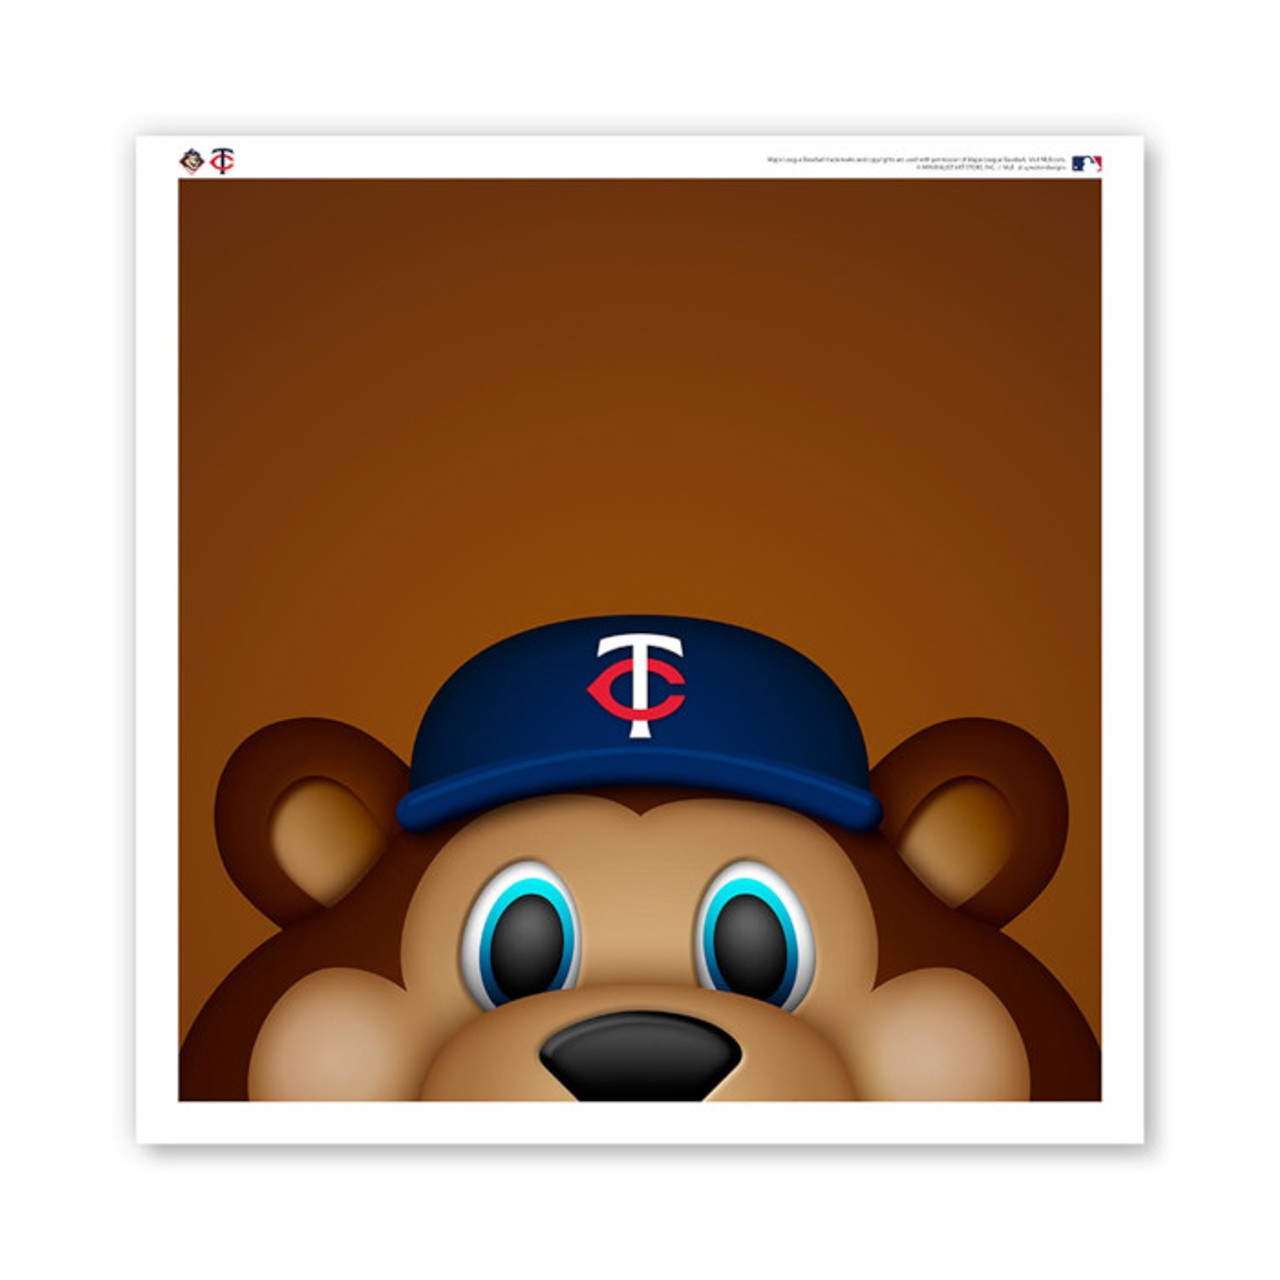 Play Ball! Cubs Baseball Mascot - Chicago Cubs - Magnet